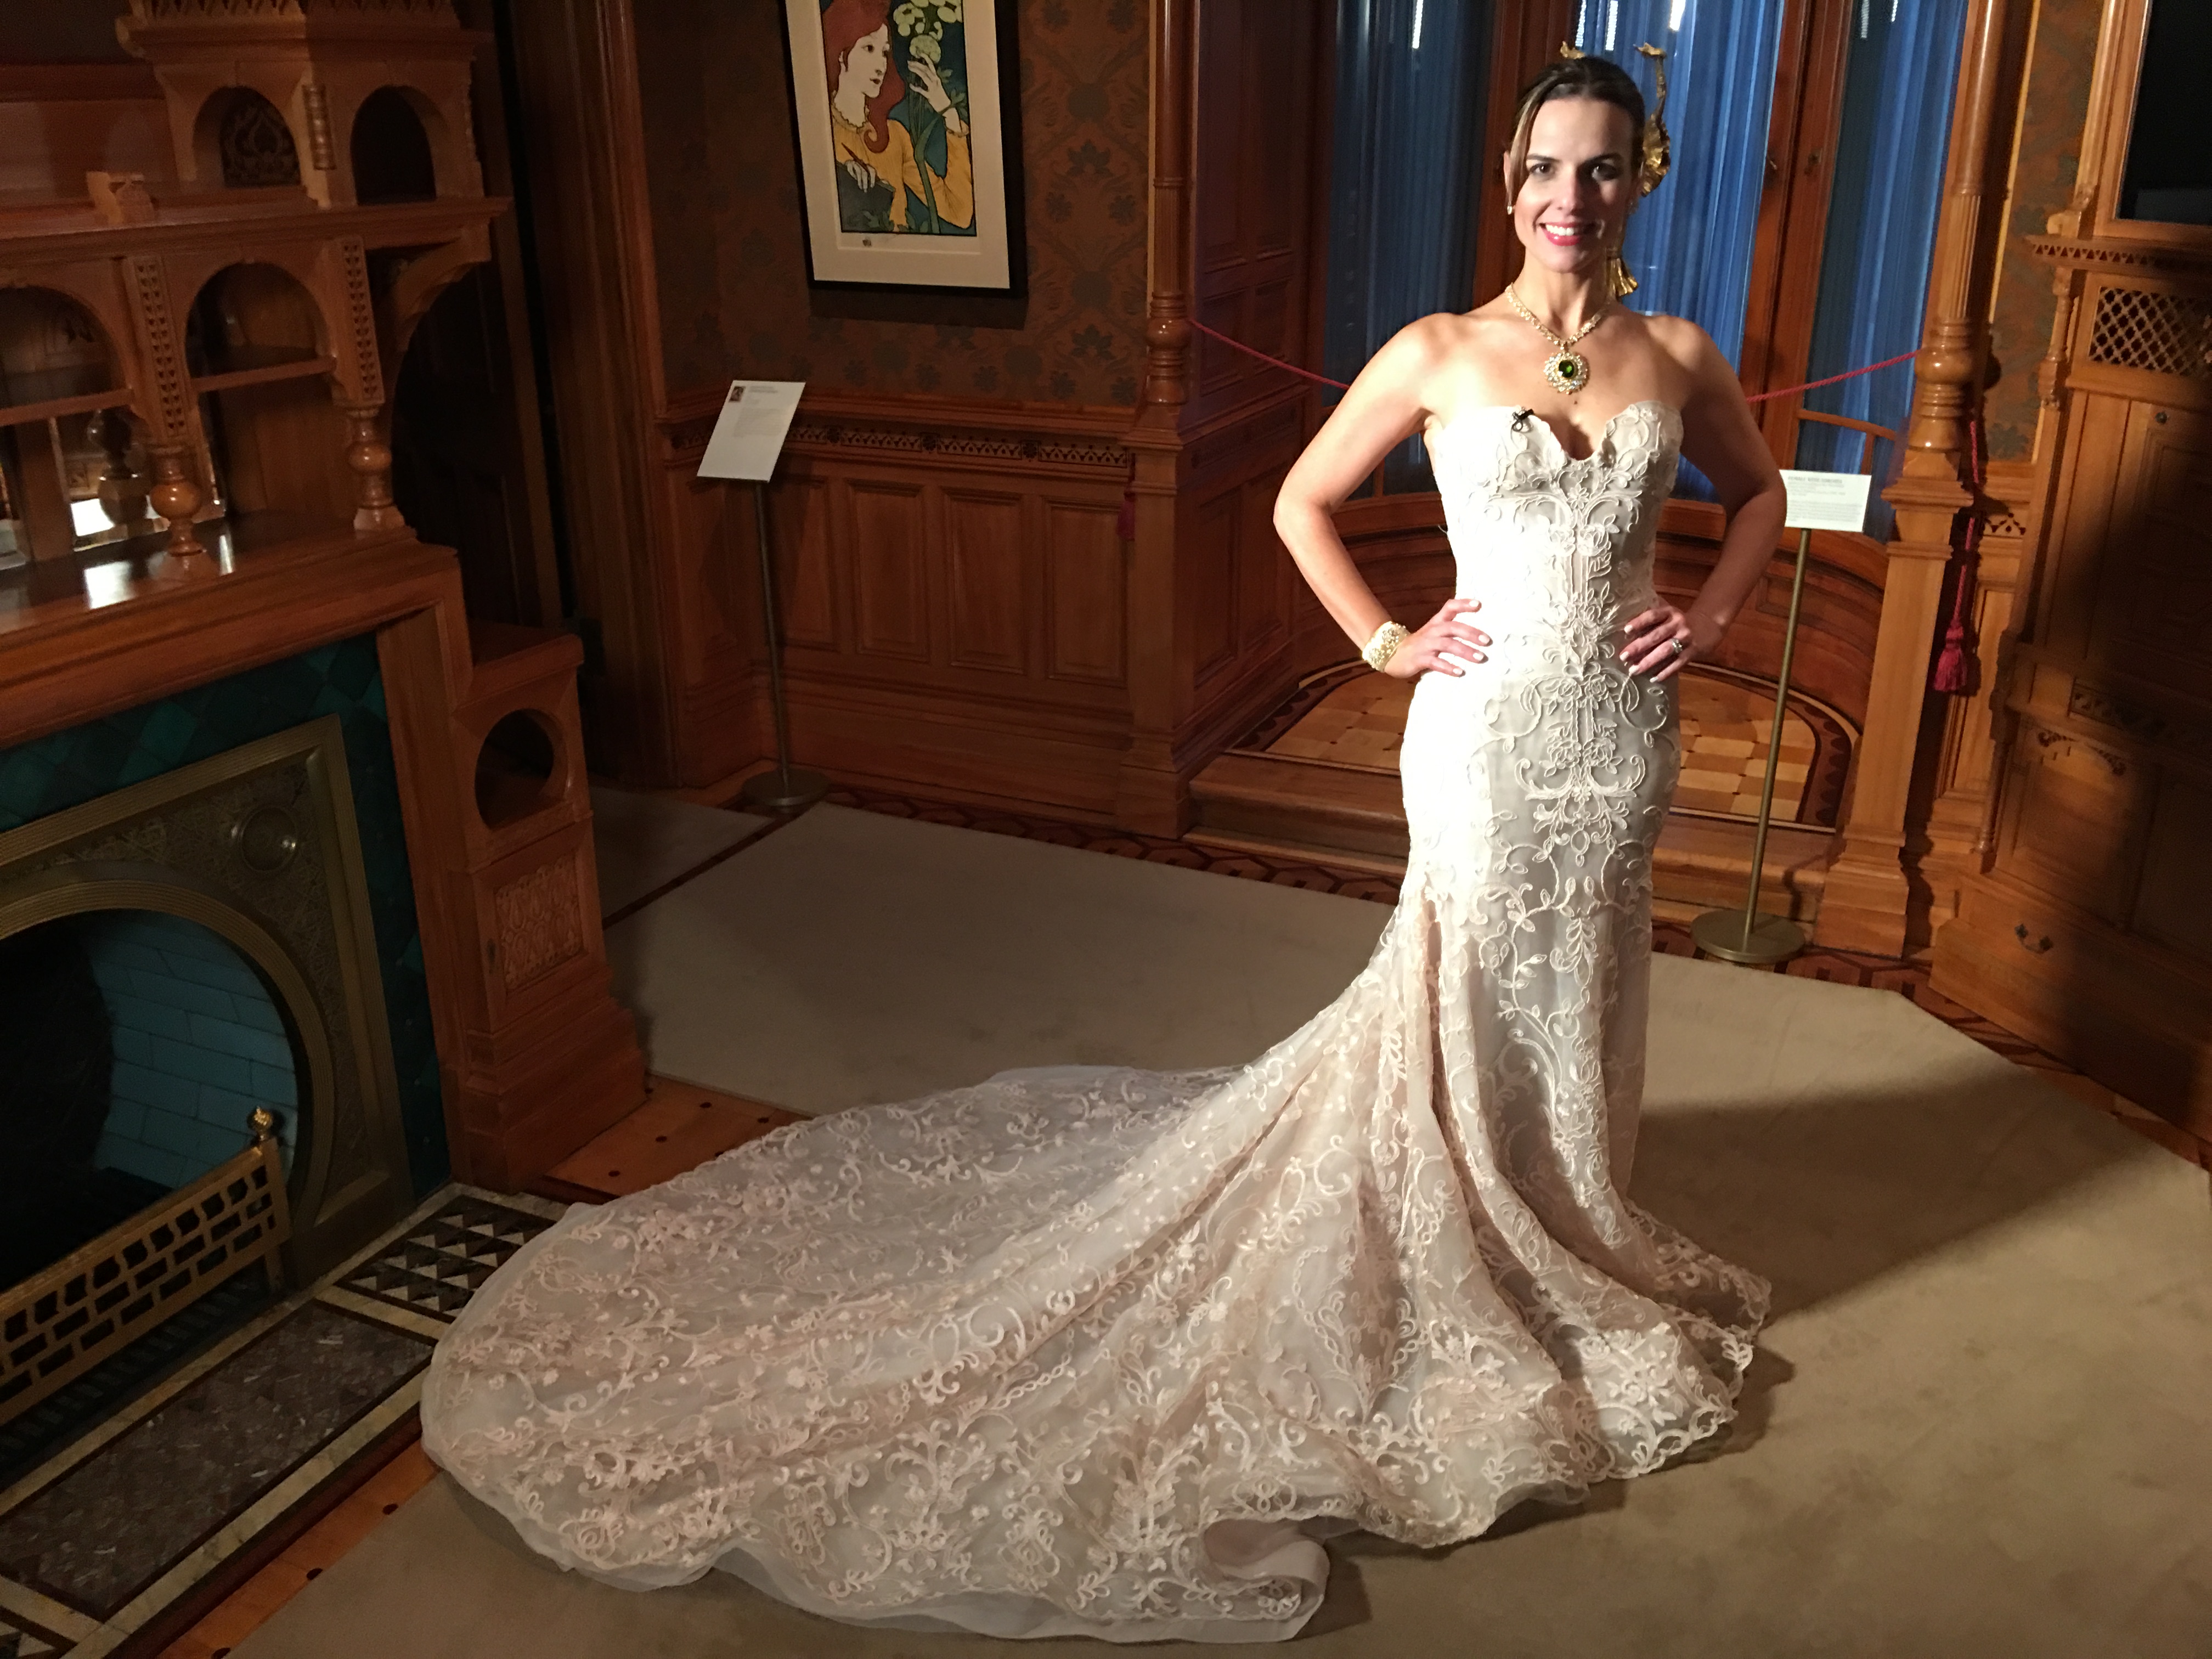 PHOTOS: WGN’s Ana Belaval wears Oscar-inspired gowns